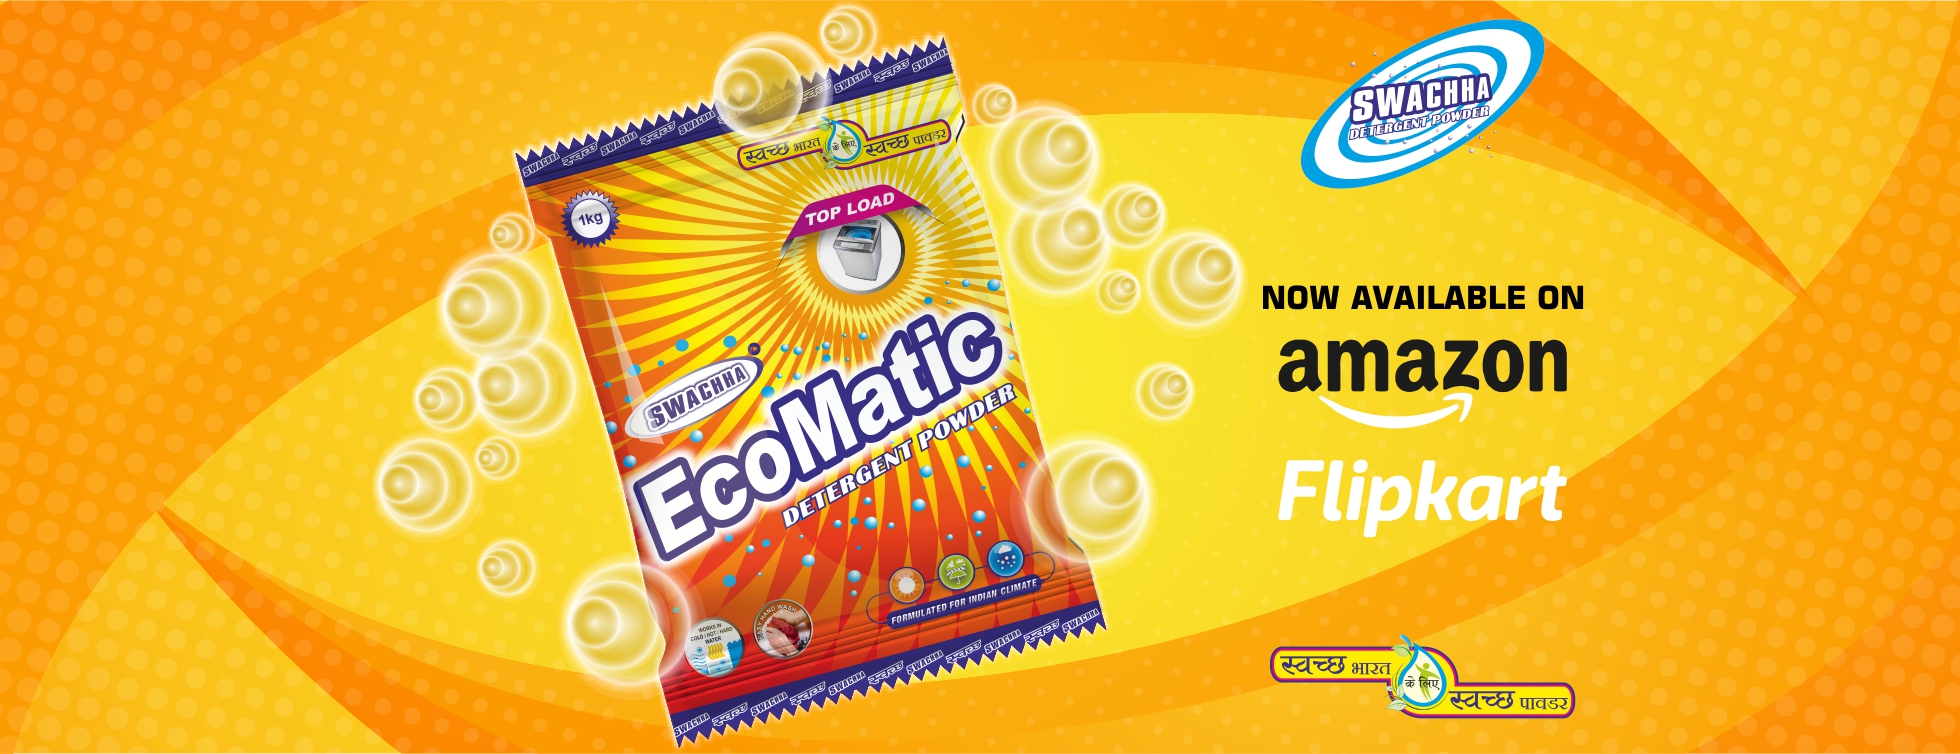 Swachha Ecomatic available on Amazon and Flipkart | Swachha Detergent Powder